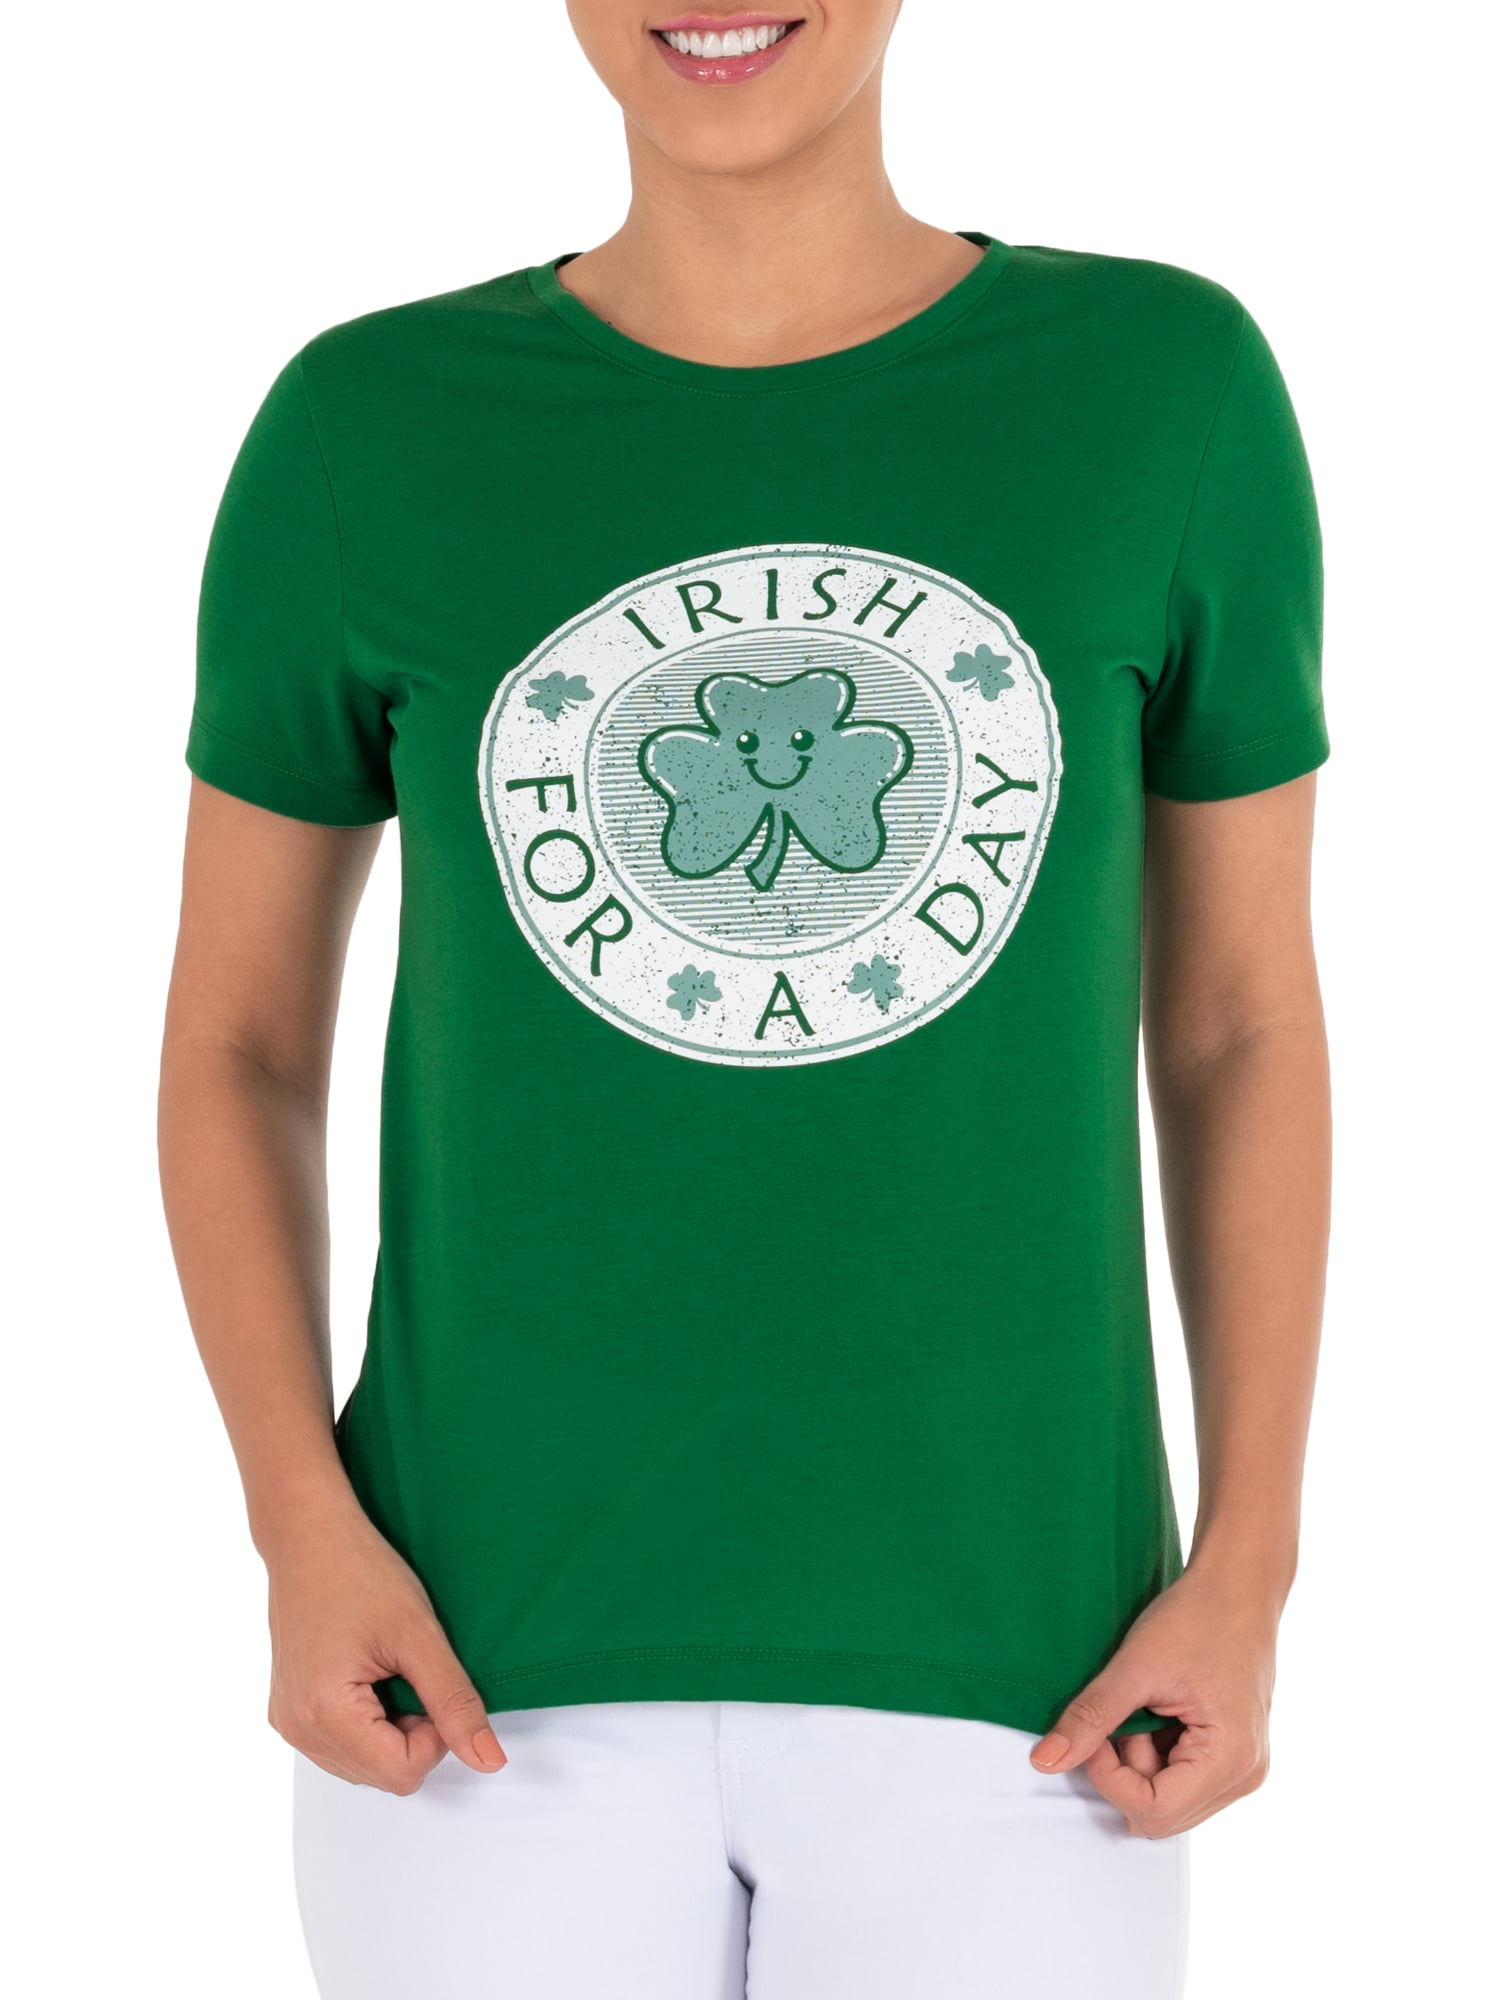 WAY TO CELEBRATE! - Women's St. Patrick's Day Short Sleeve T-shirt